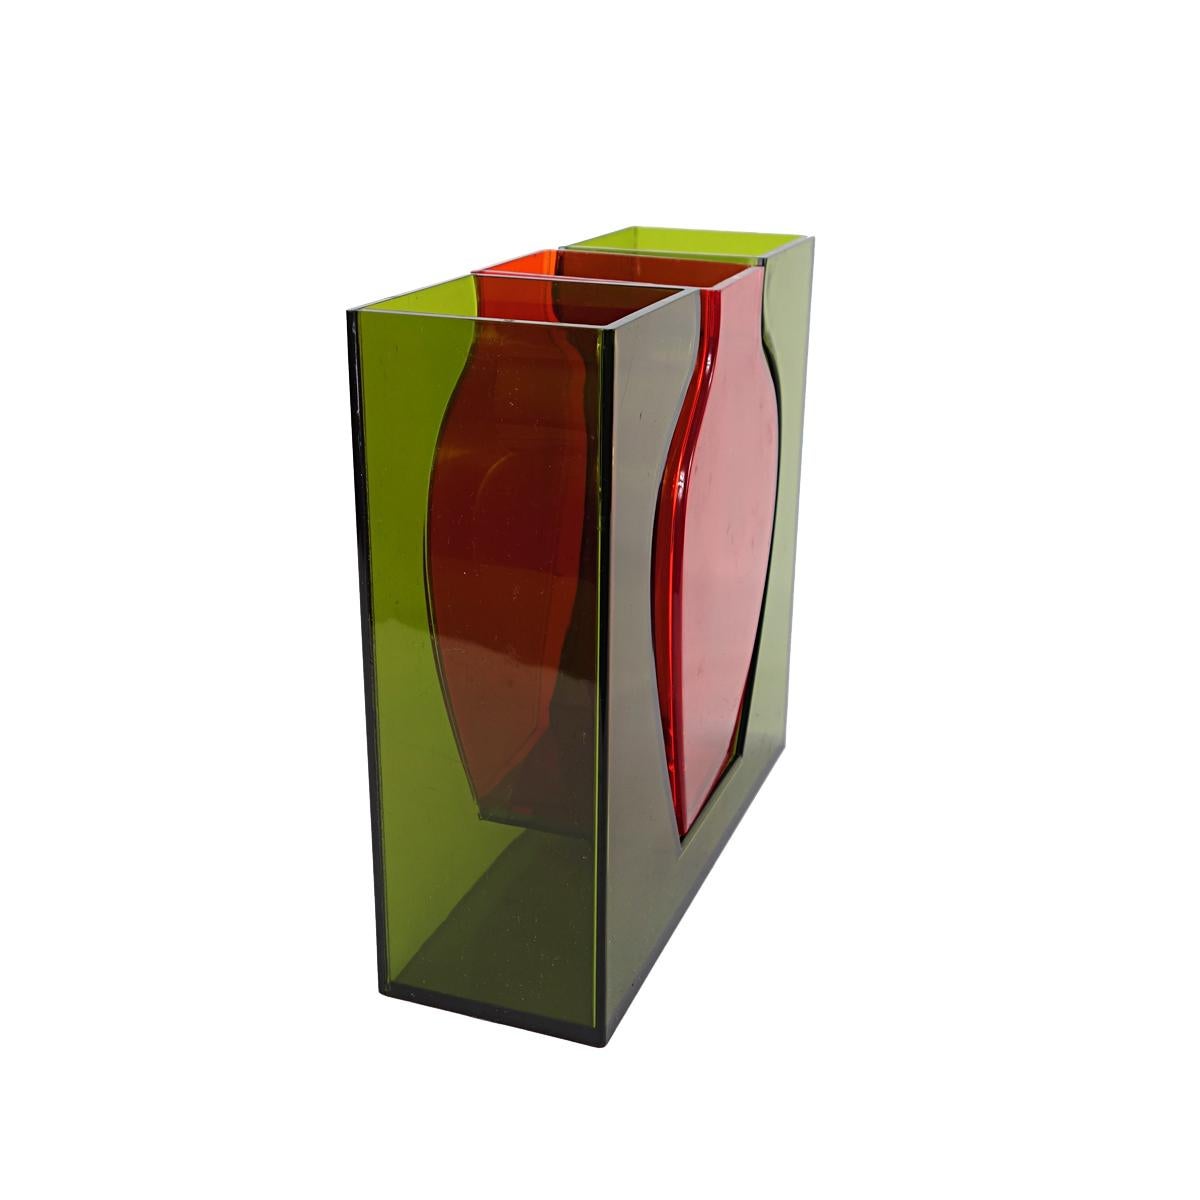 1990s Dutch Design Plexiglass Red Vase Within a Green Vase For Sale 1